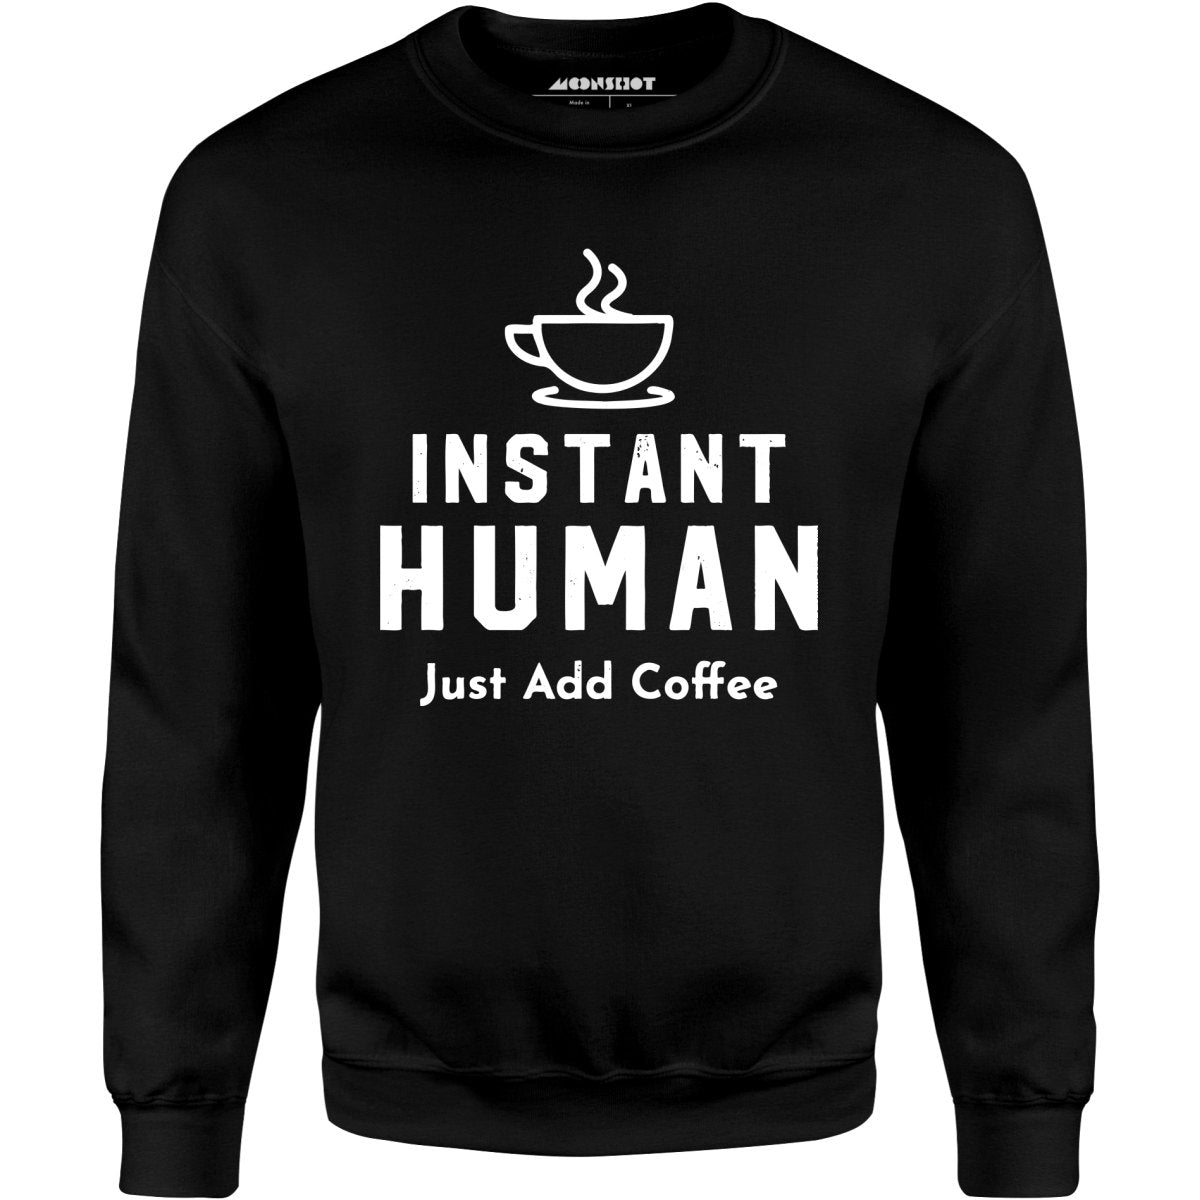 Instant Human Just Add Coffee - Unisex Sweatshirt